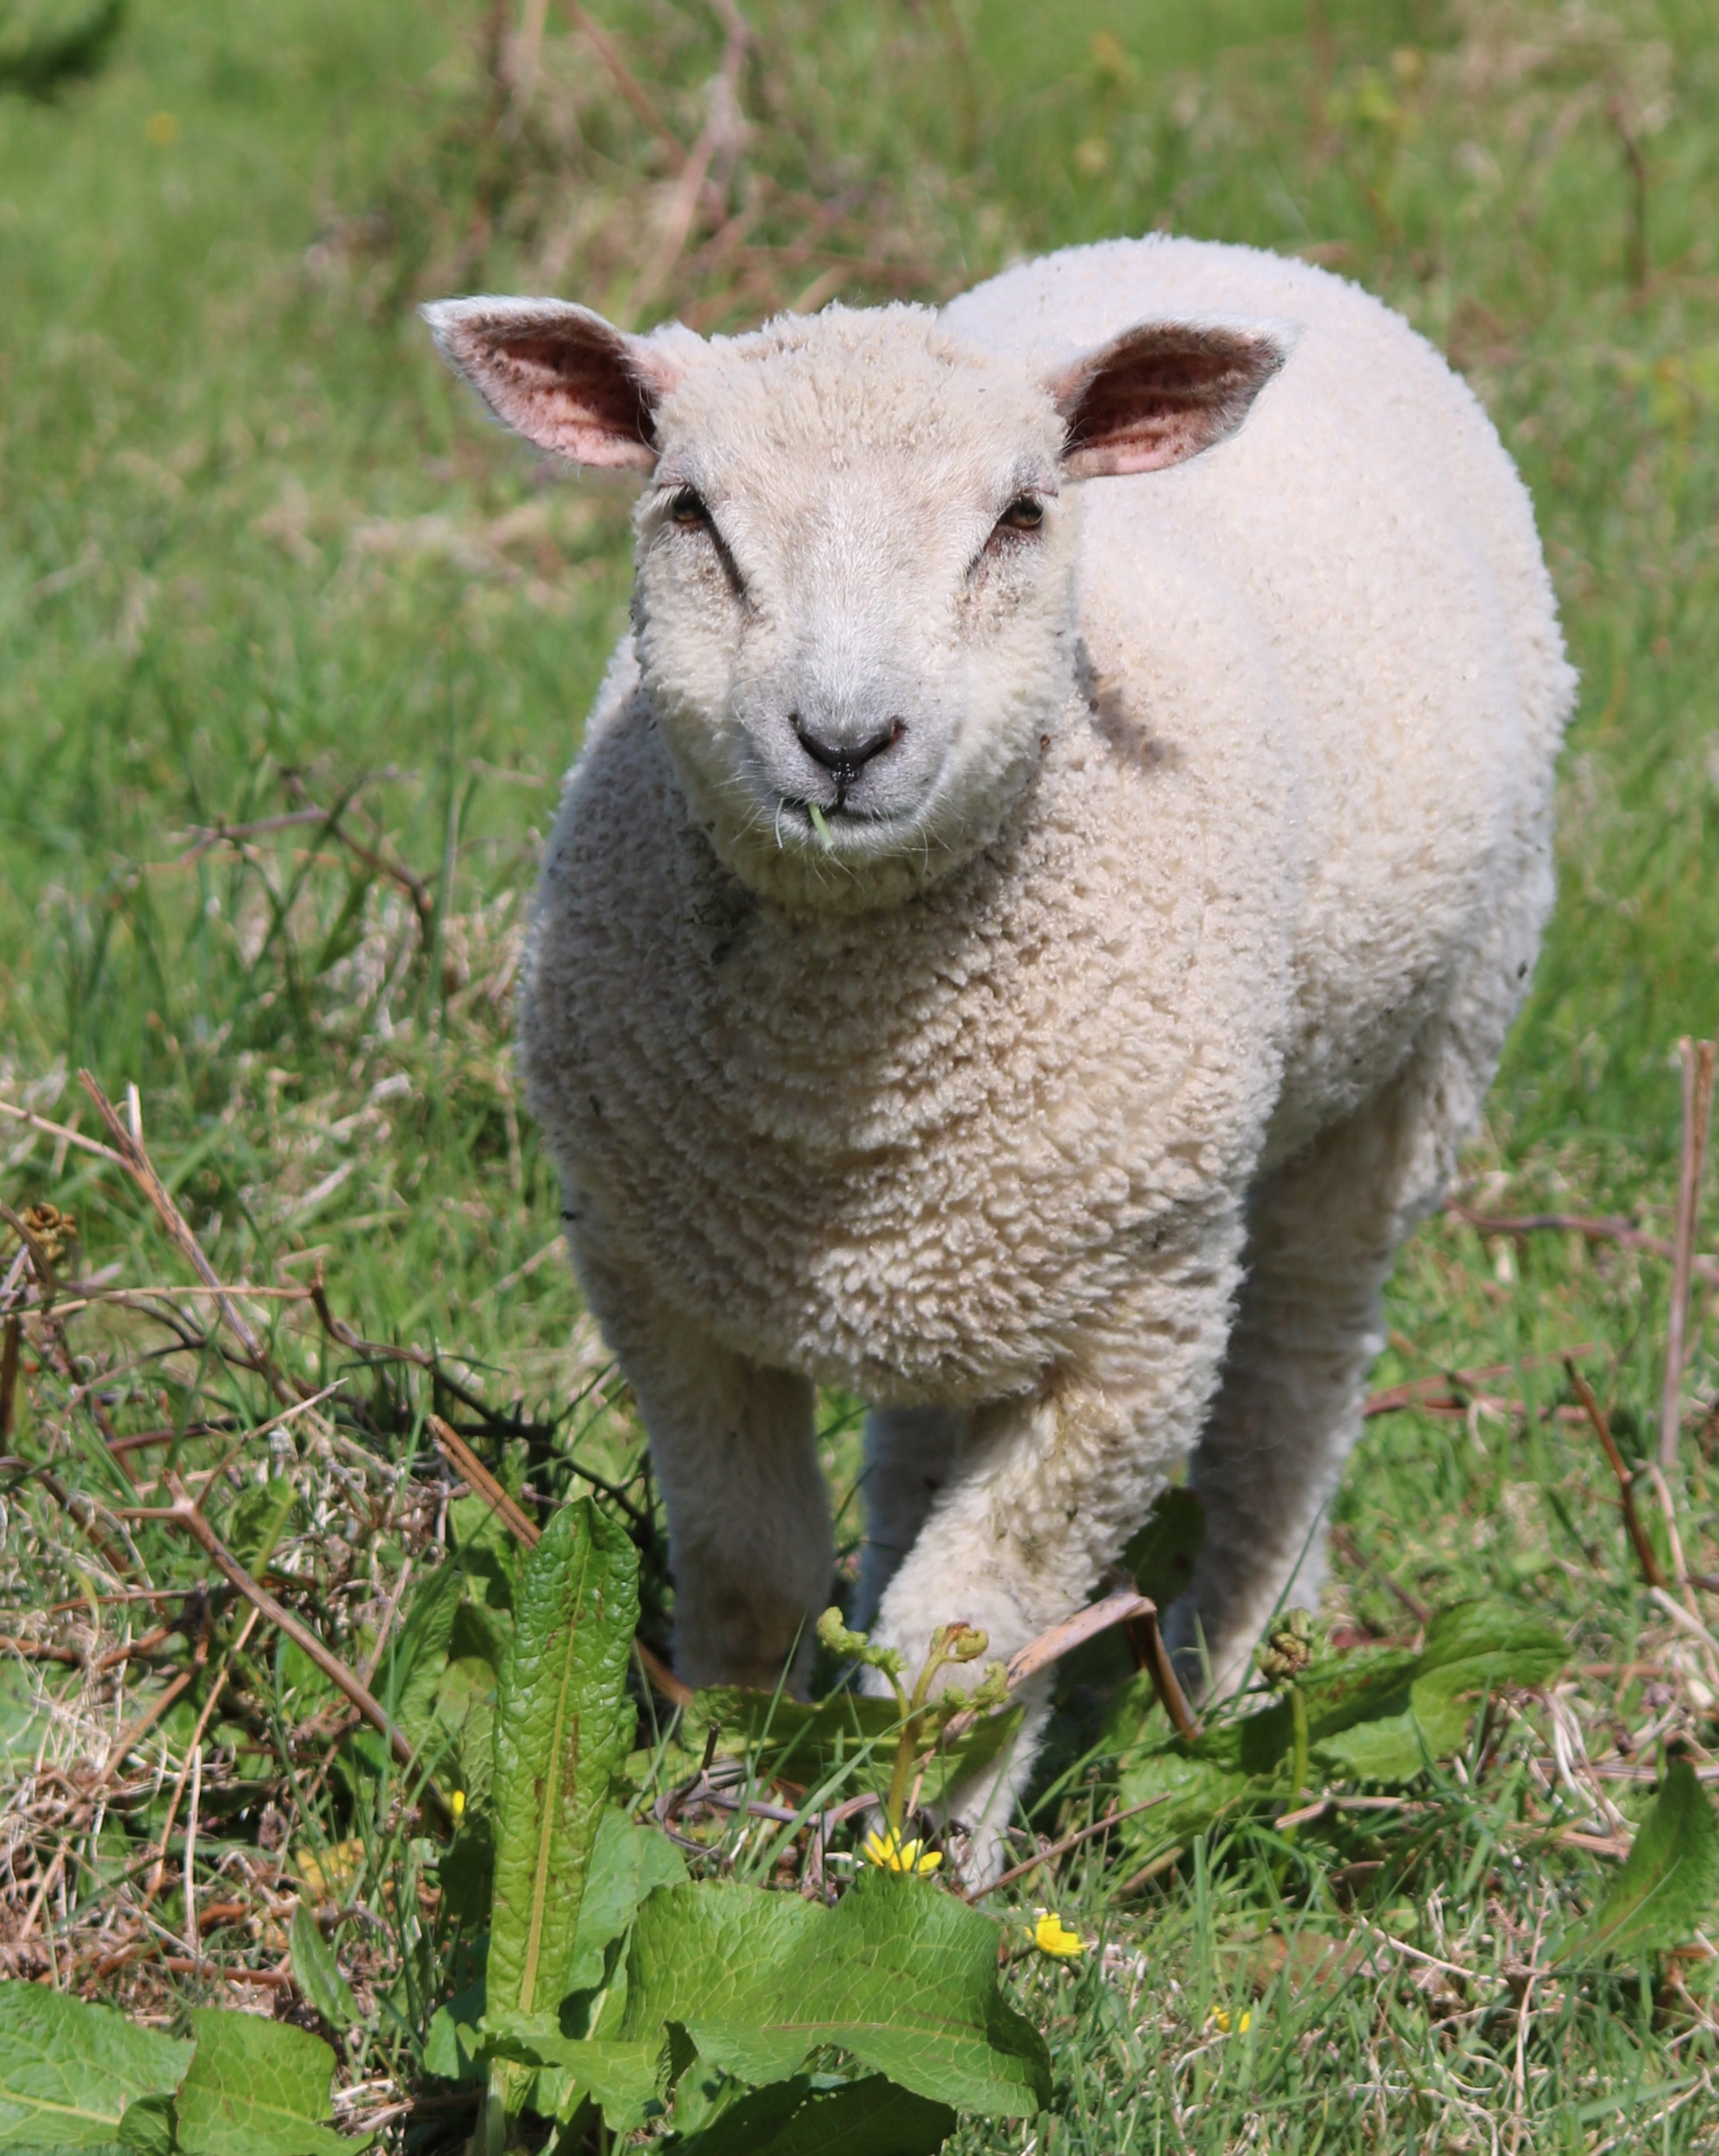 Lamb, Farm, Sheep, Agriculture, Field, one animal, animal themes